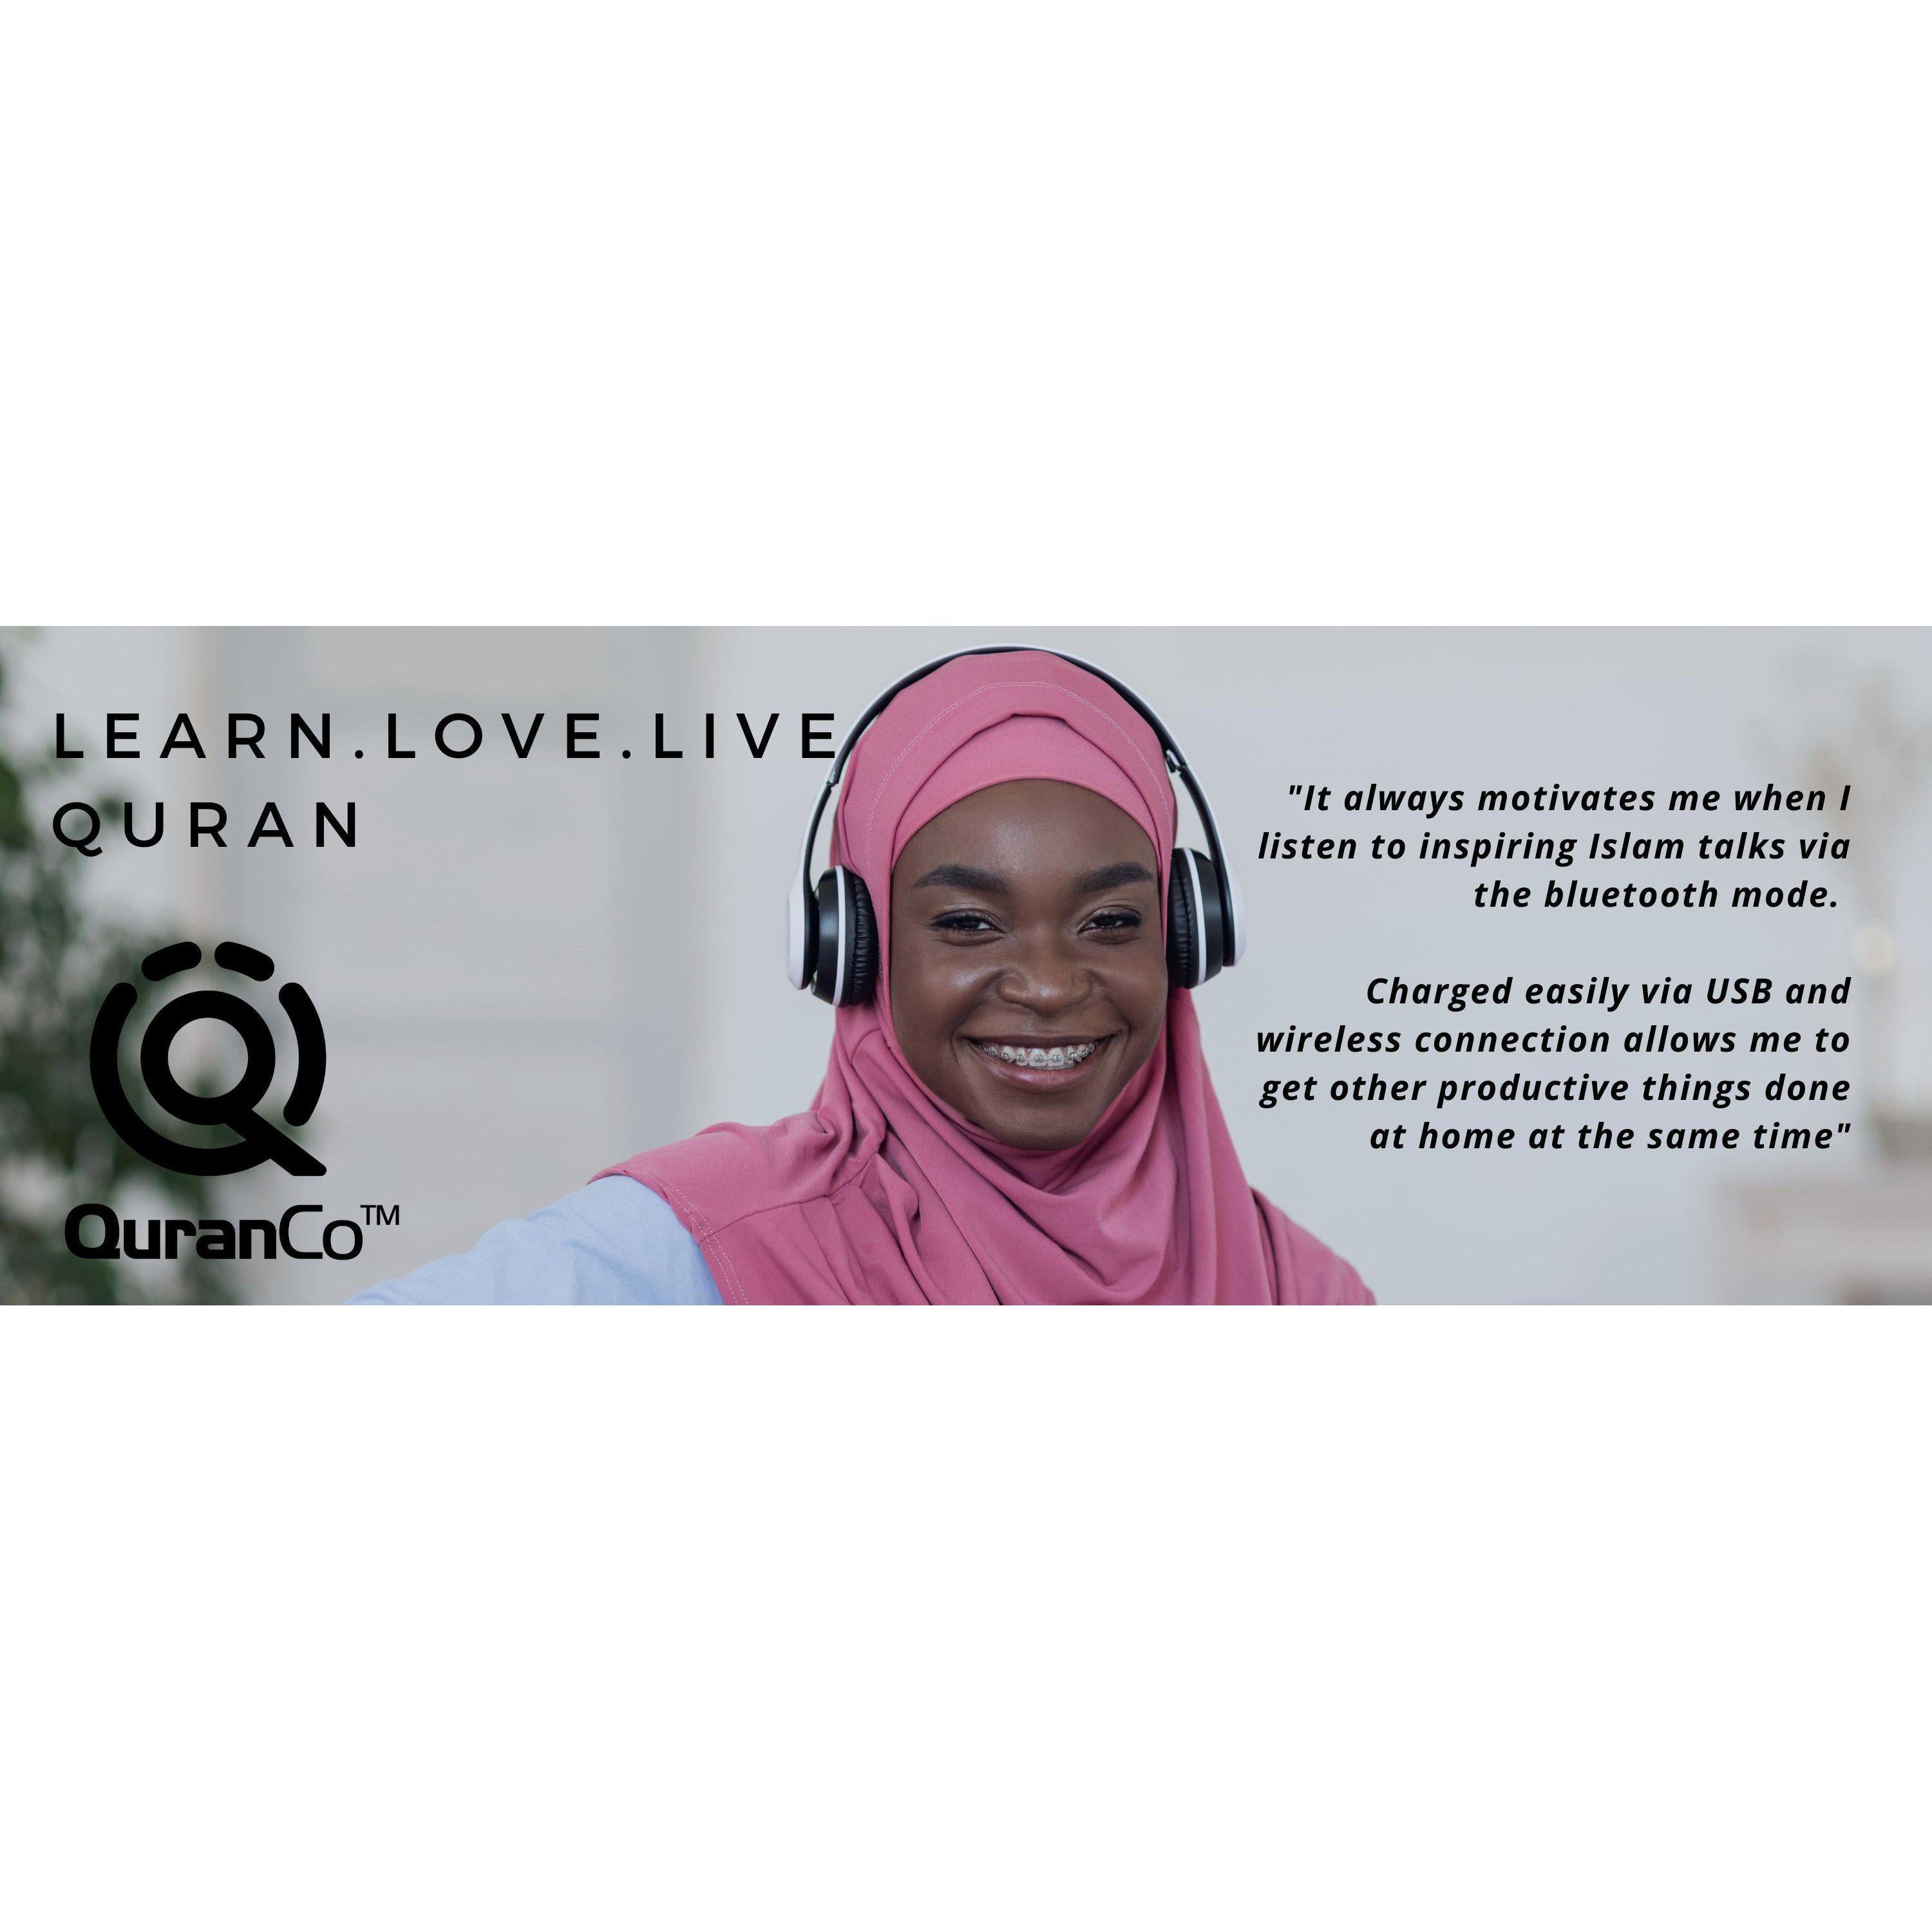 Quran Headphone Speaker - Quran Co™